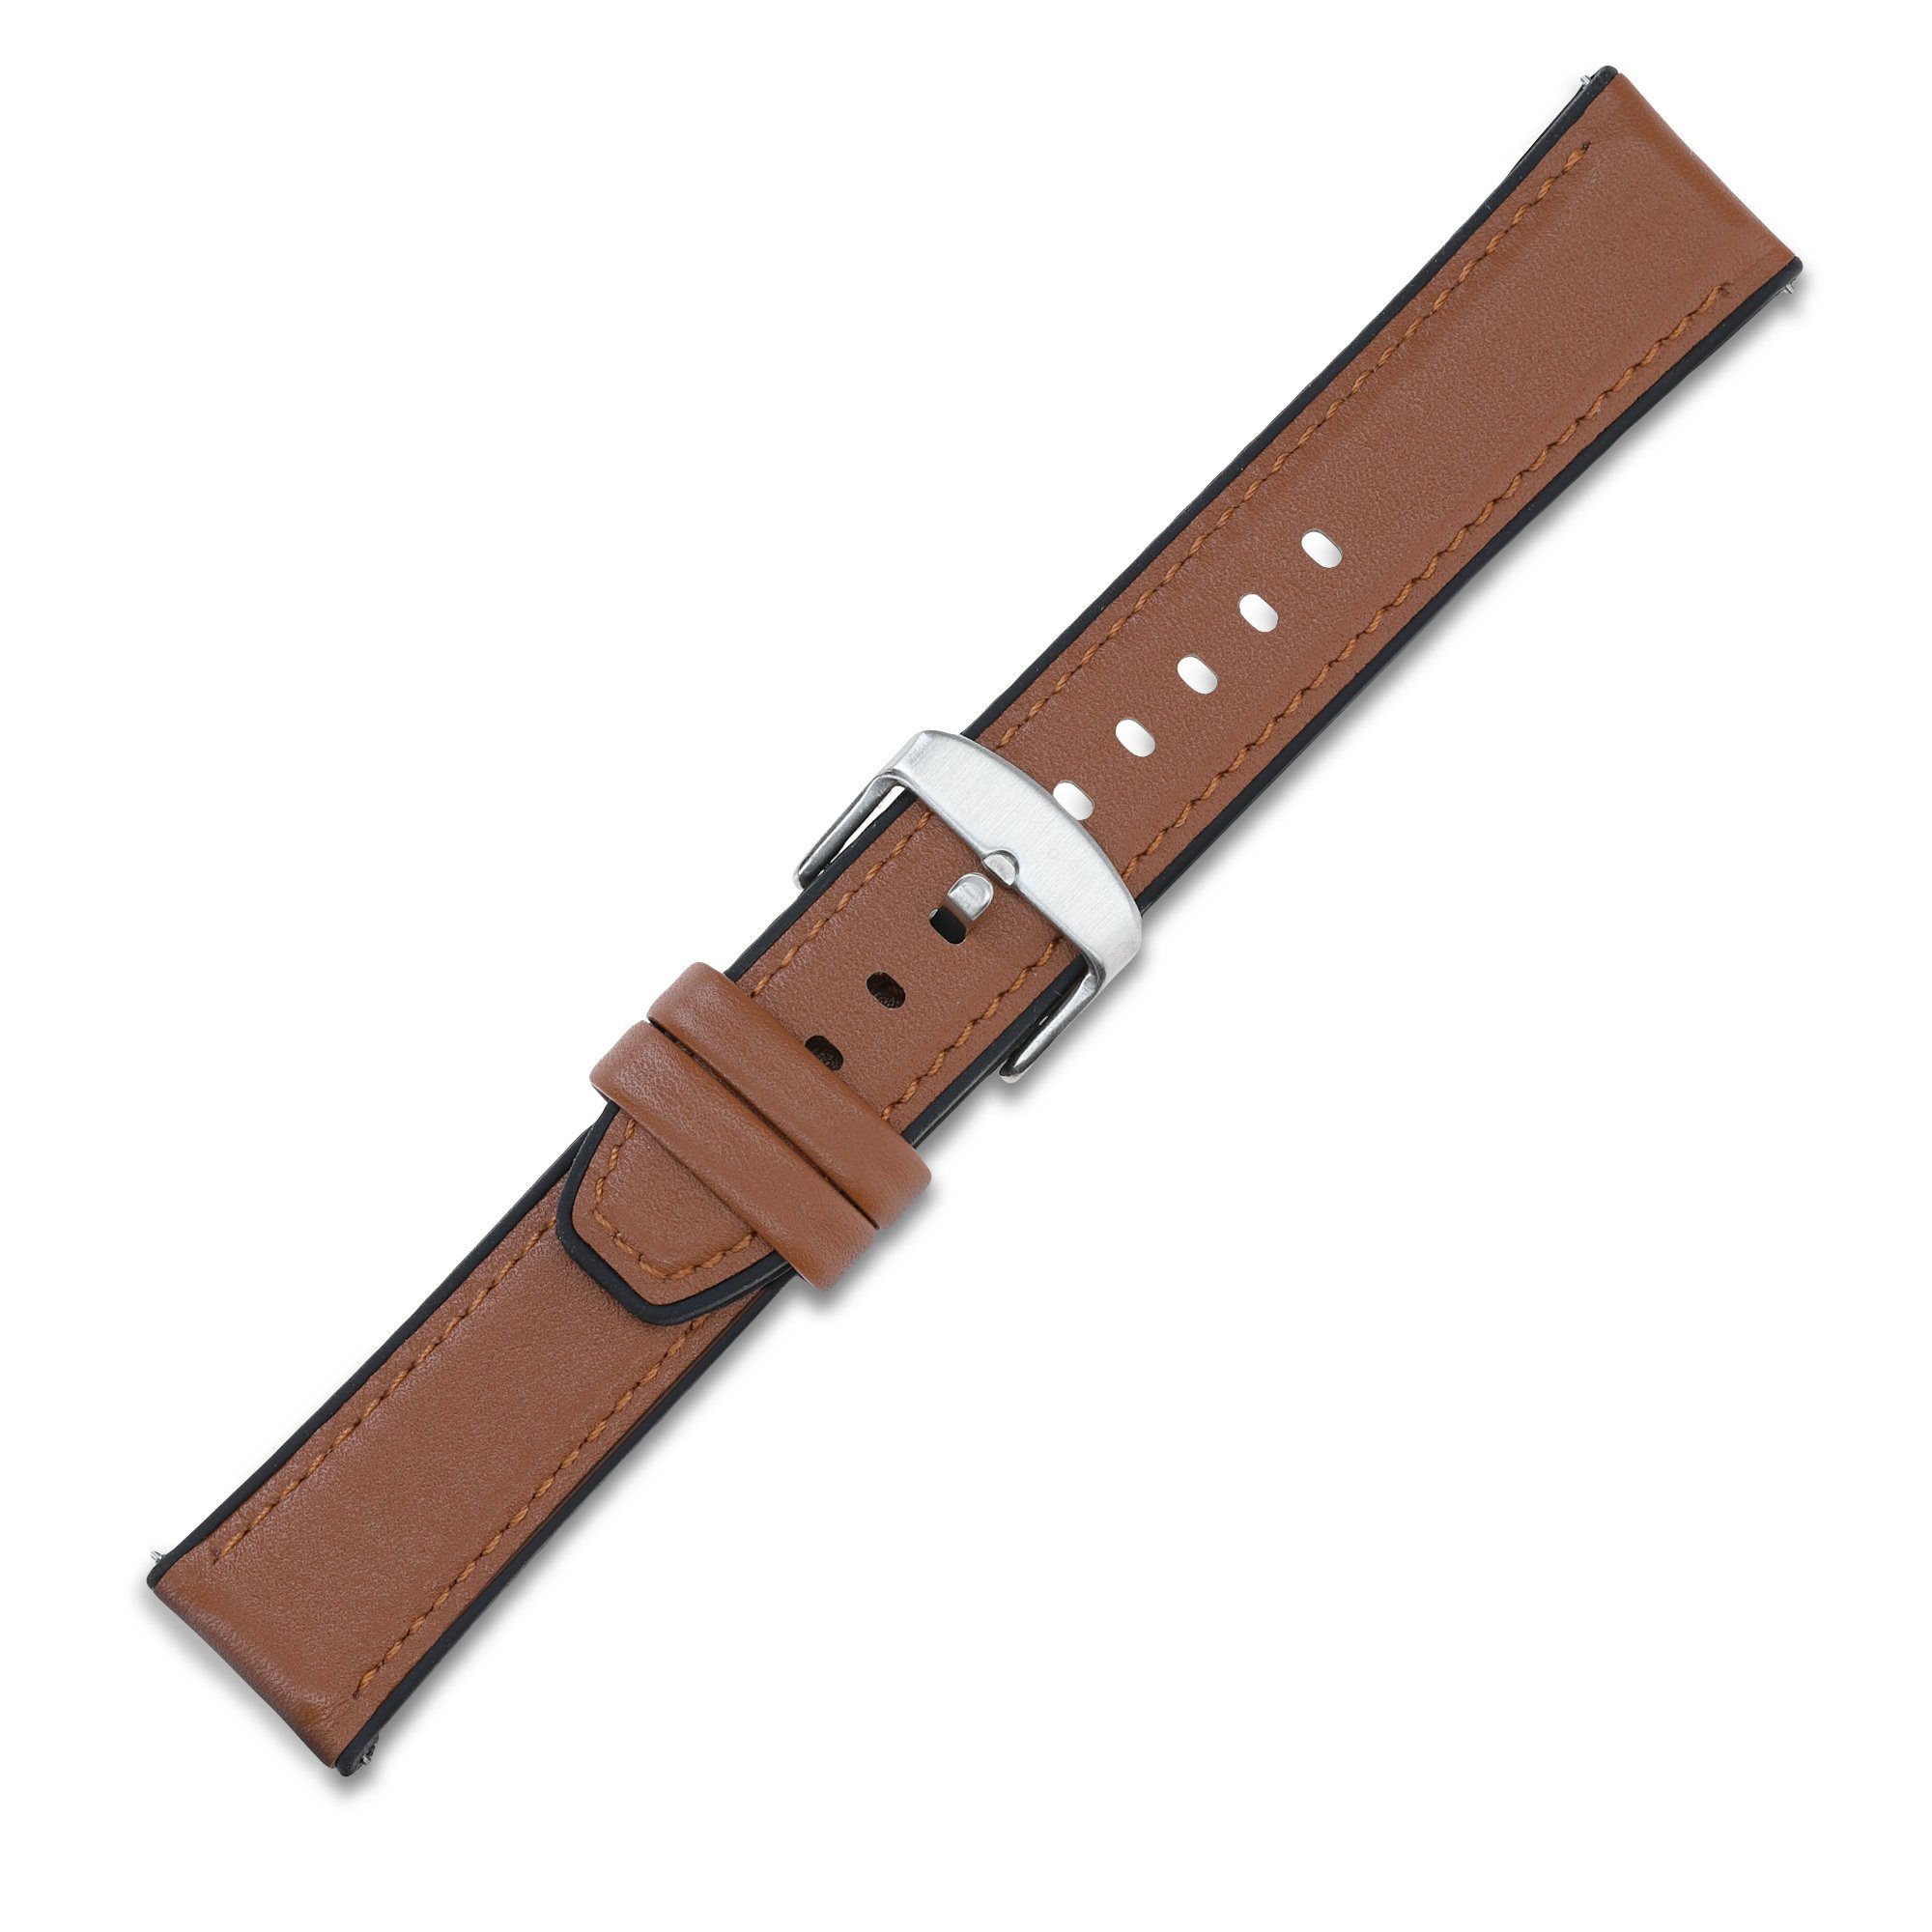 kwmobile Uhrenarmband Sportarmband für Huami Leder GTS Fitnesstracker Uhrenverschluss 2, GTS Ersatzarmband / Amazfit